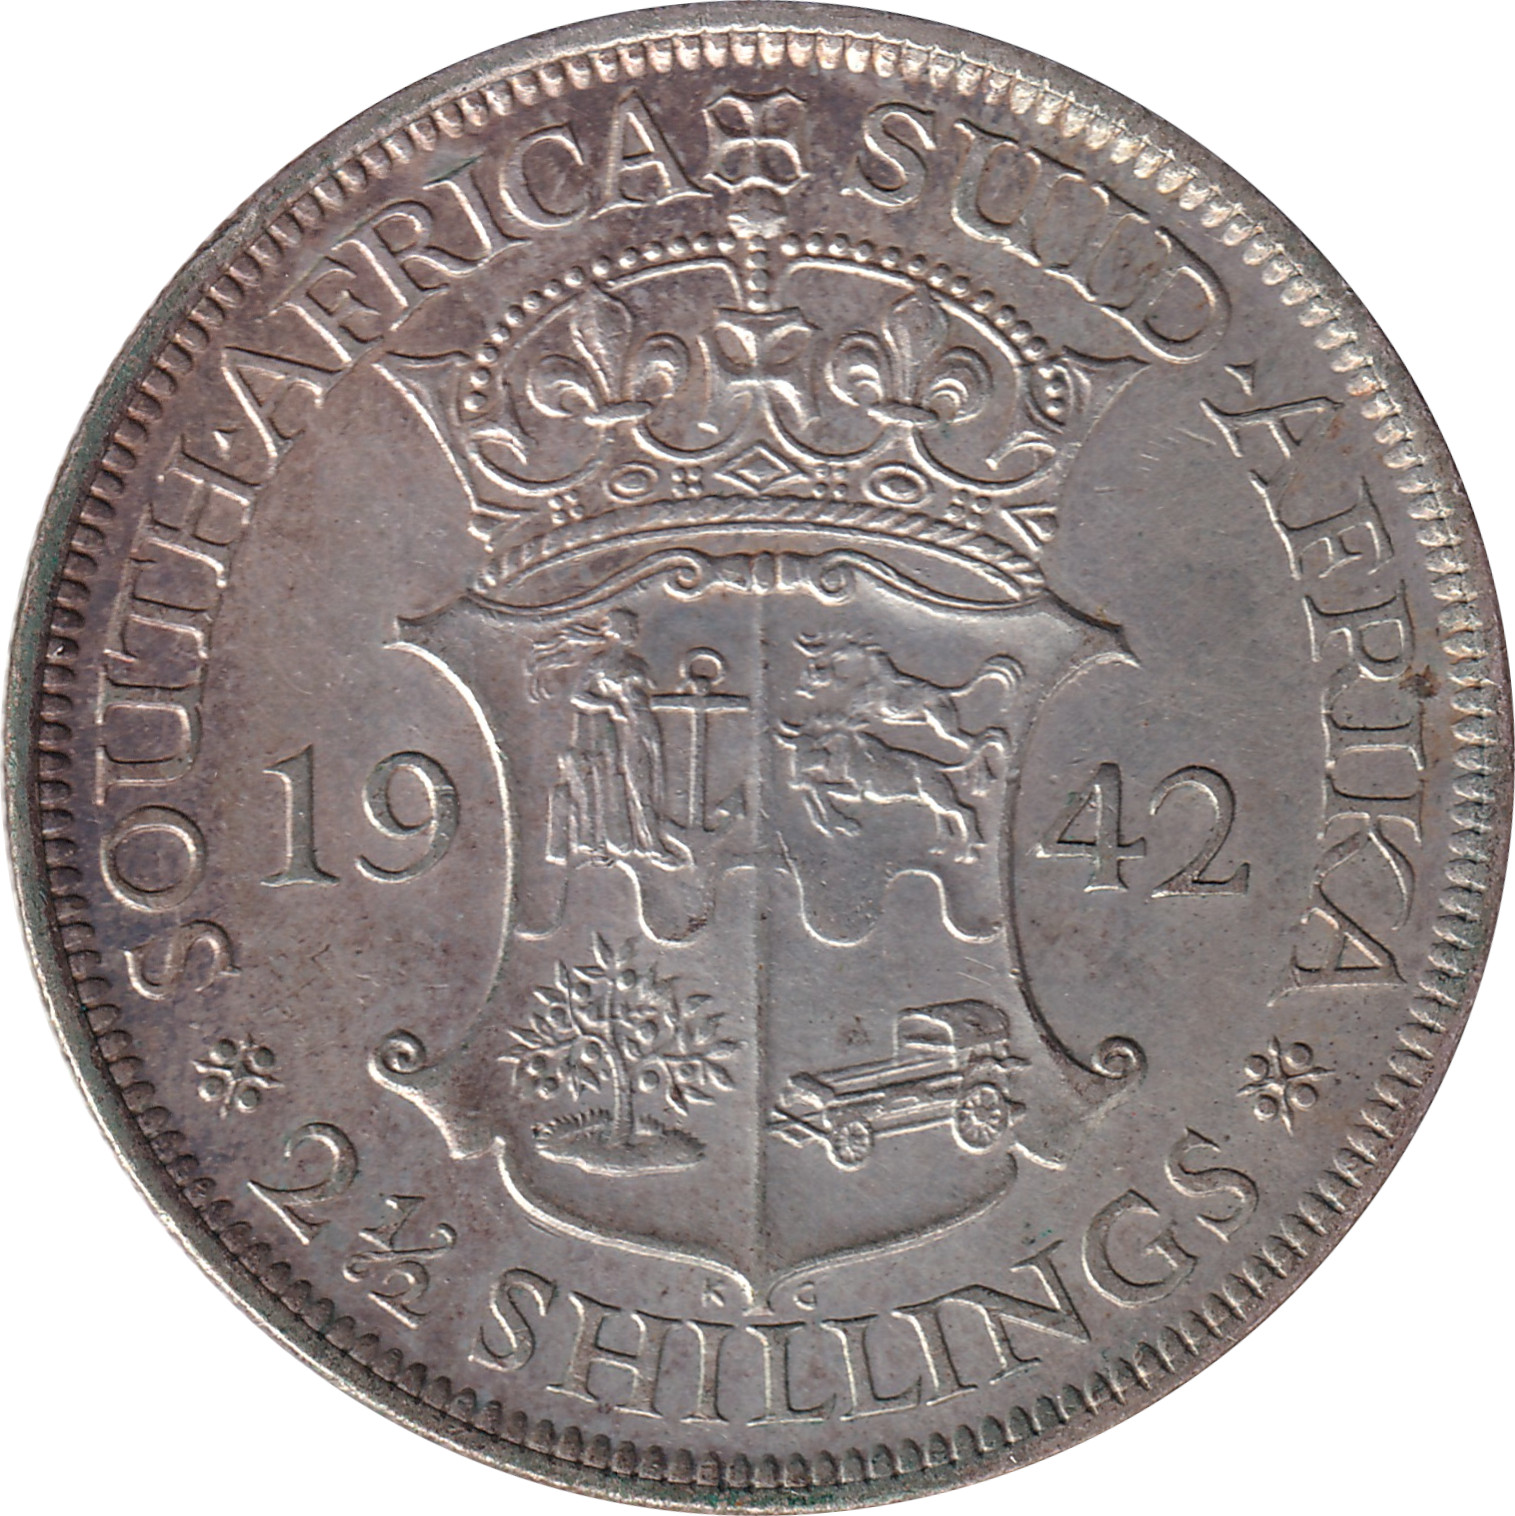 2 1/2 shillings - Georges VI